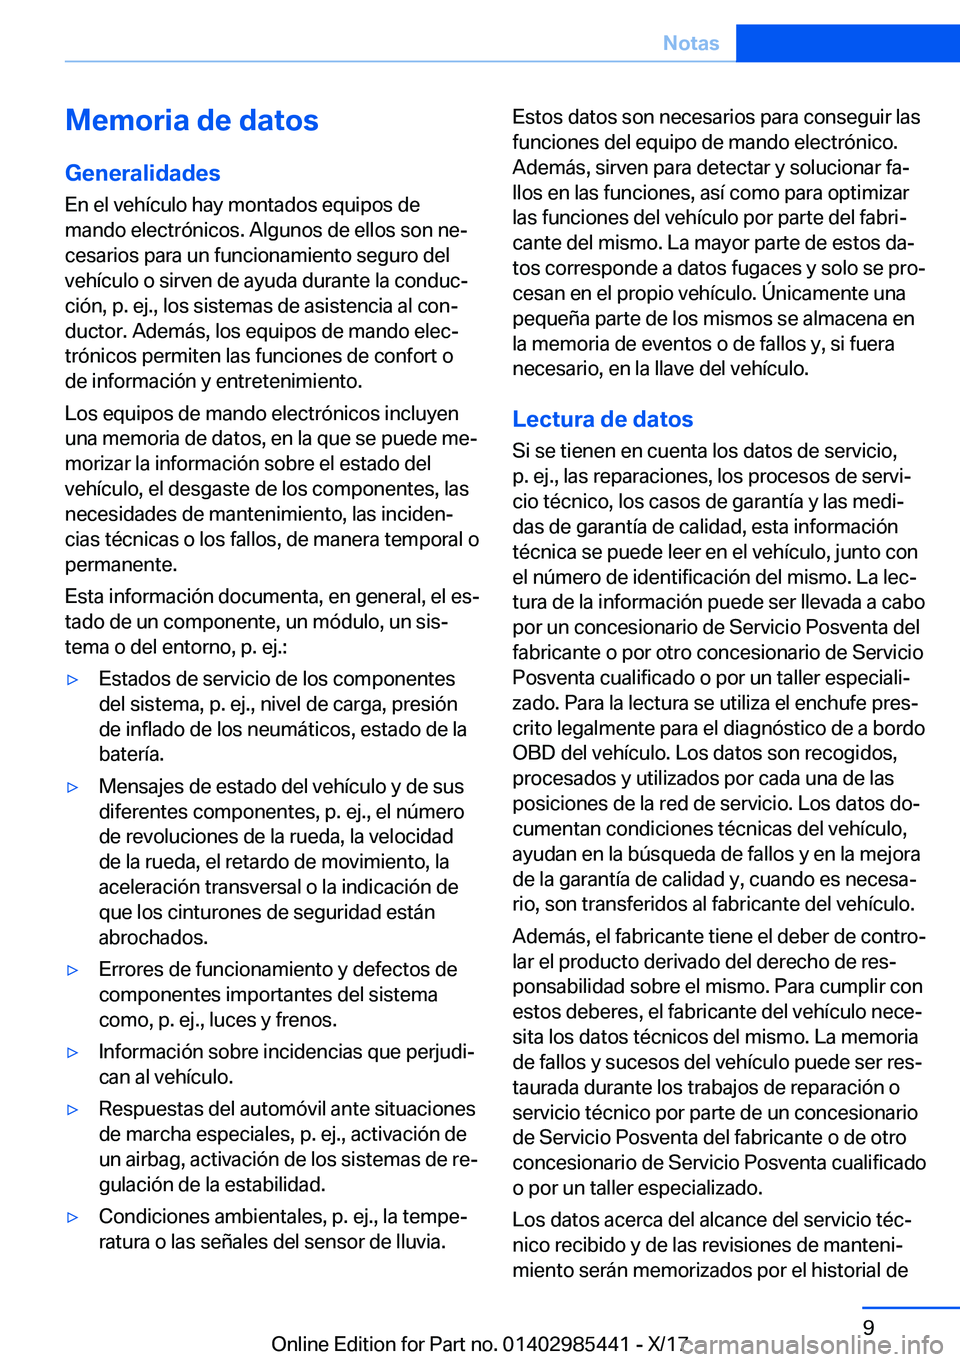 BMW X1 2018  Manuales de Empleo (in Spanish) �M�e�m�o�r�i�a��d�e��d�a�t�o�s�G�e�n�e�r�a�l�i�d�a�d�e�s
�E�n� �e�l� �v�e�h�